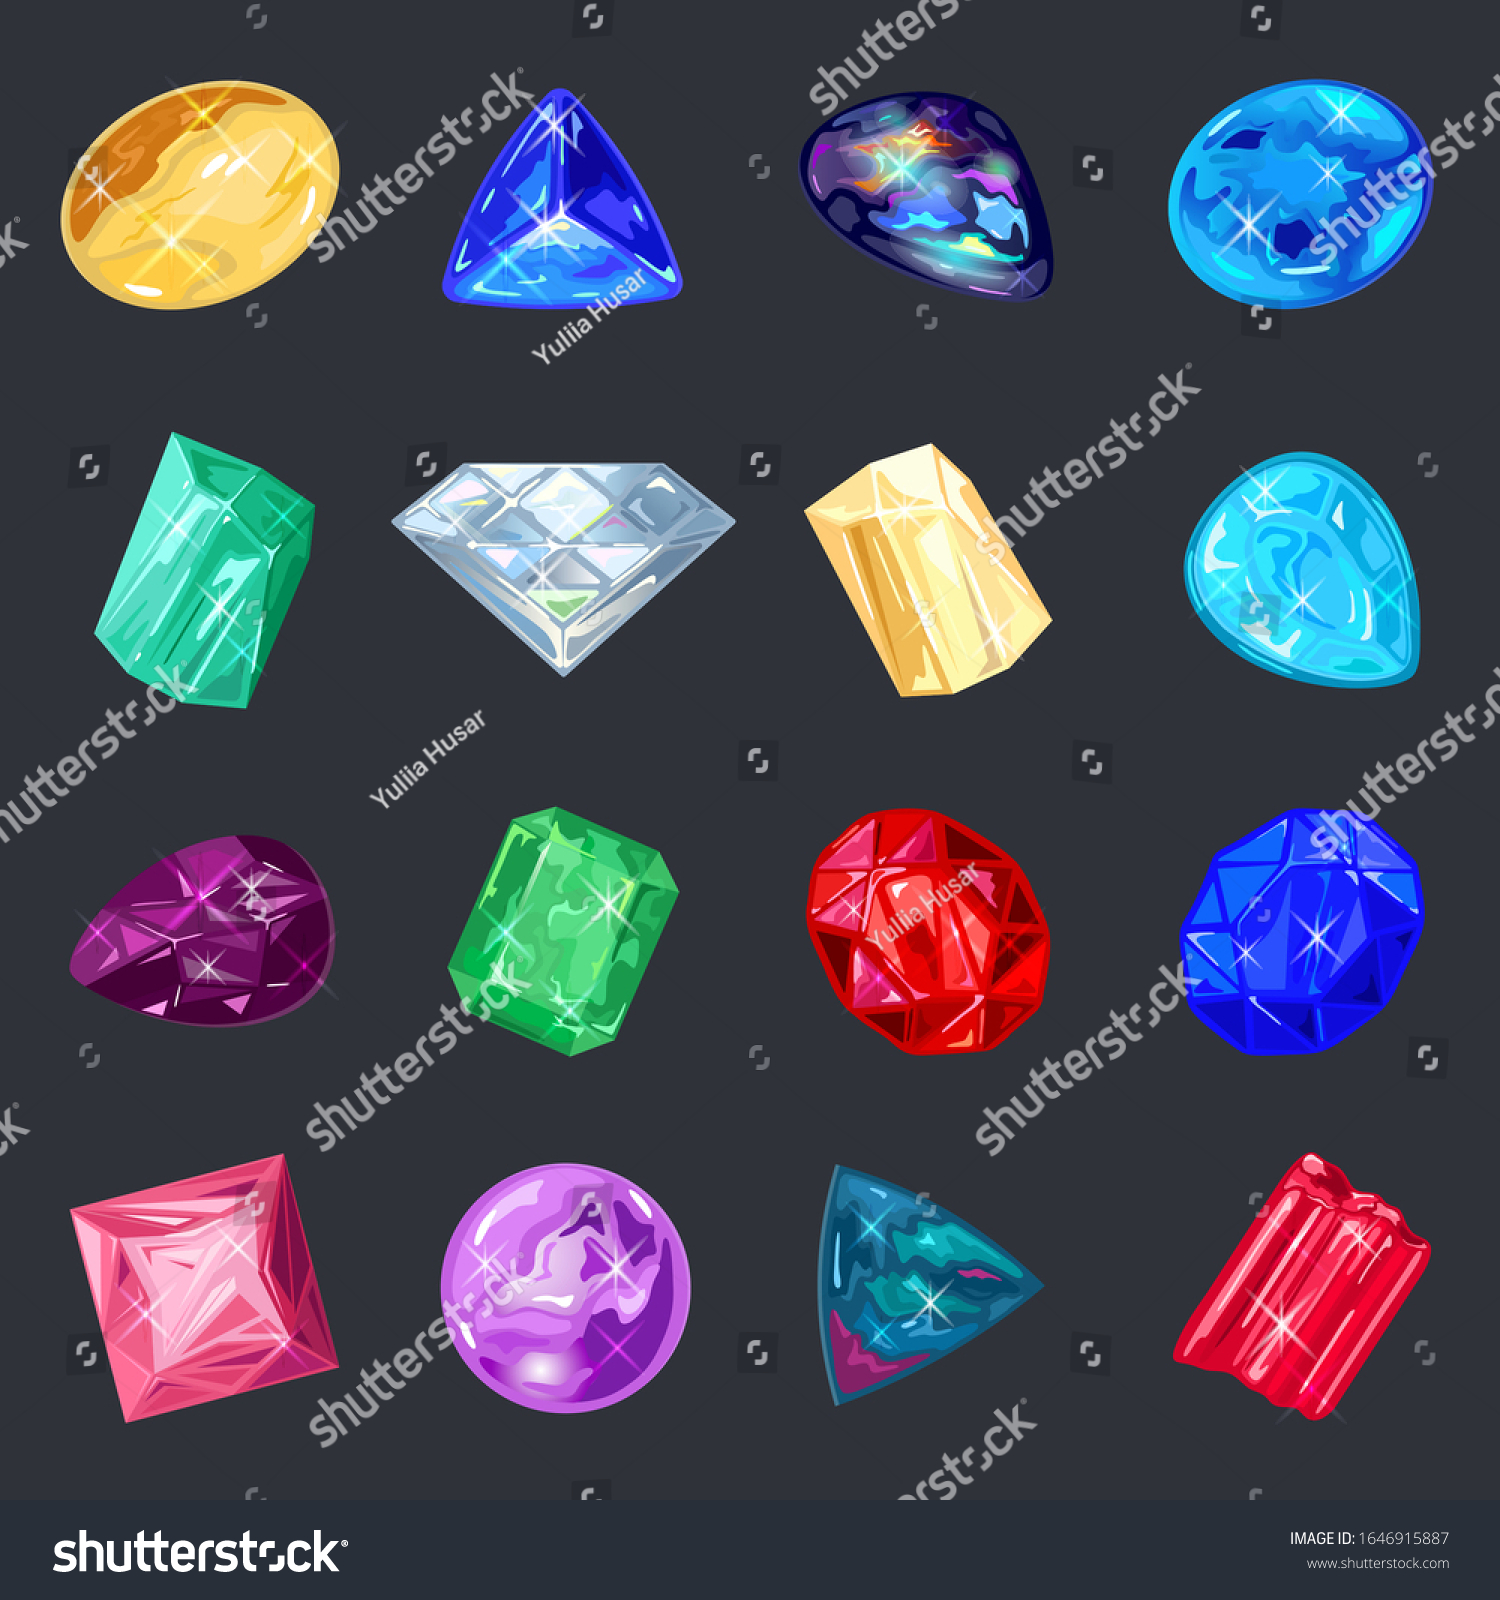 SVG of Assortment of jewelry, gem shop. Big vector set with red, yellow, pink, blue, green, purple minerals, gemstones diamond, emerald, ruby, sapphire tourmaline amethyst alexandrite garnet citrine svg